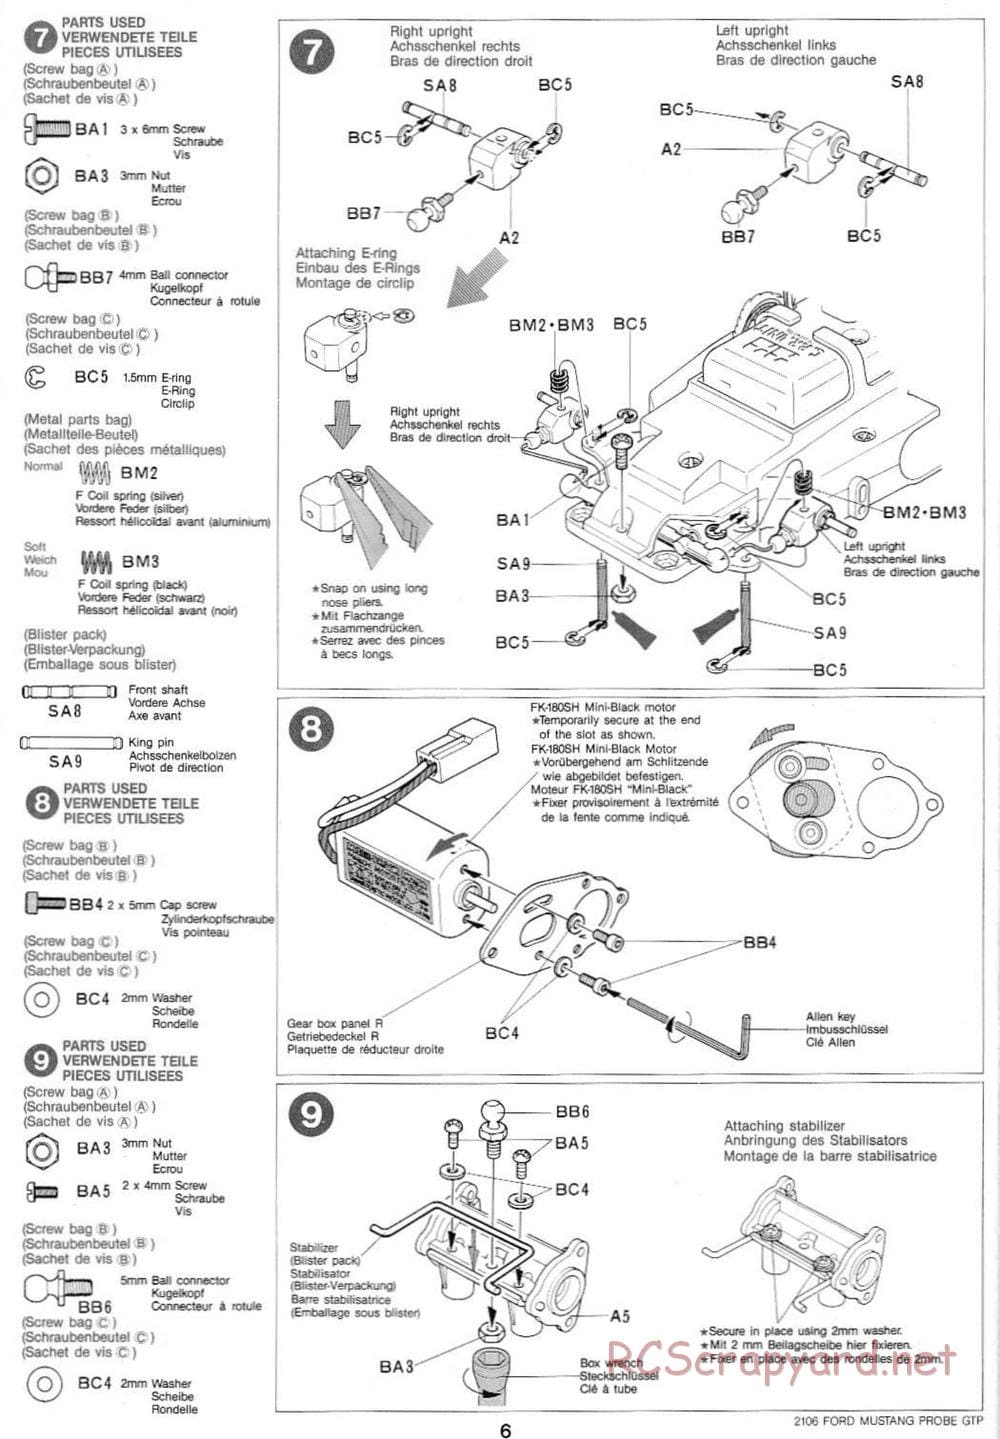 Tamiya - Tamtech - Ford Mustang Probe GTP Chassis - Manual - Page 6